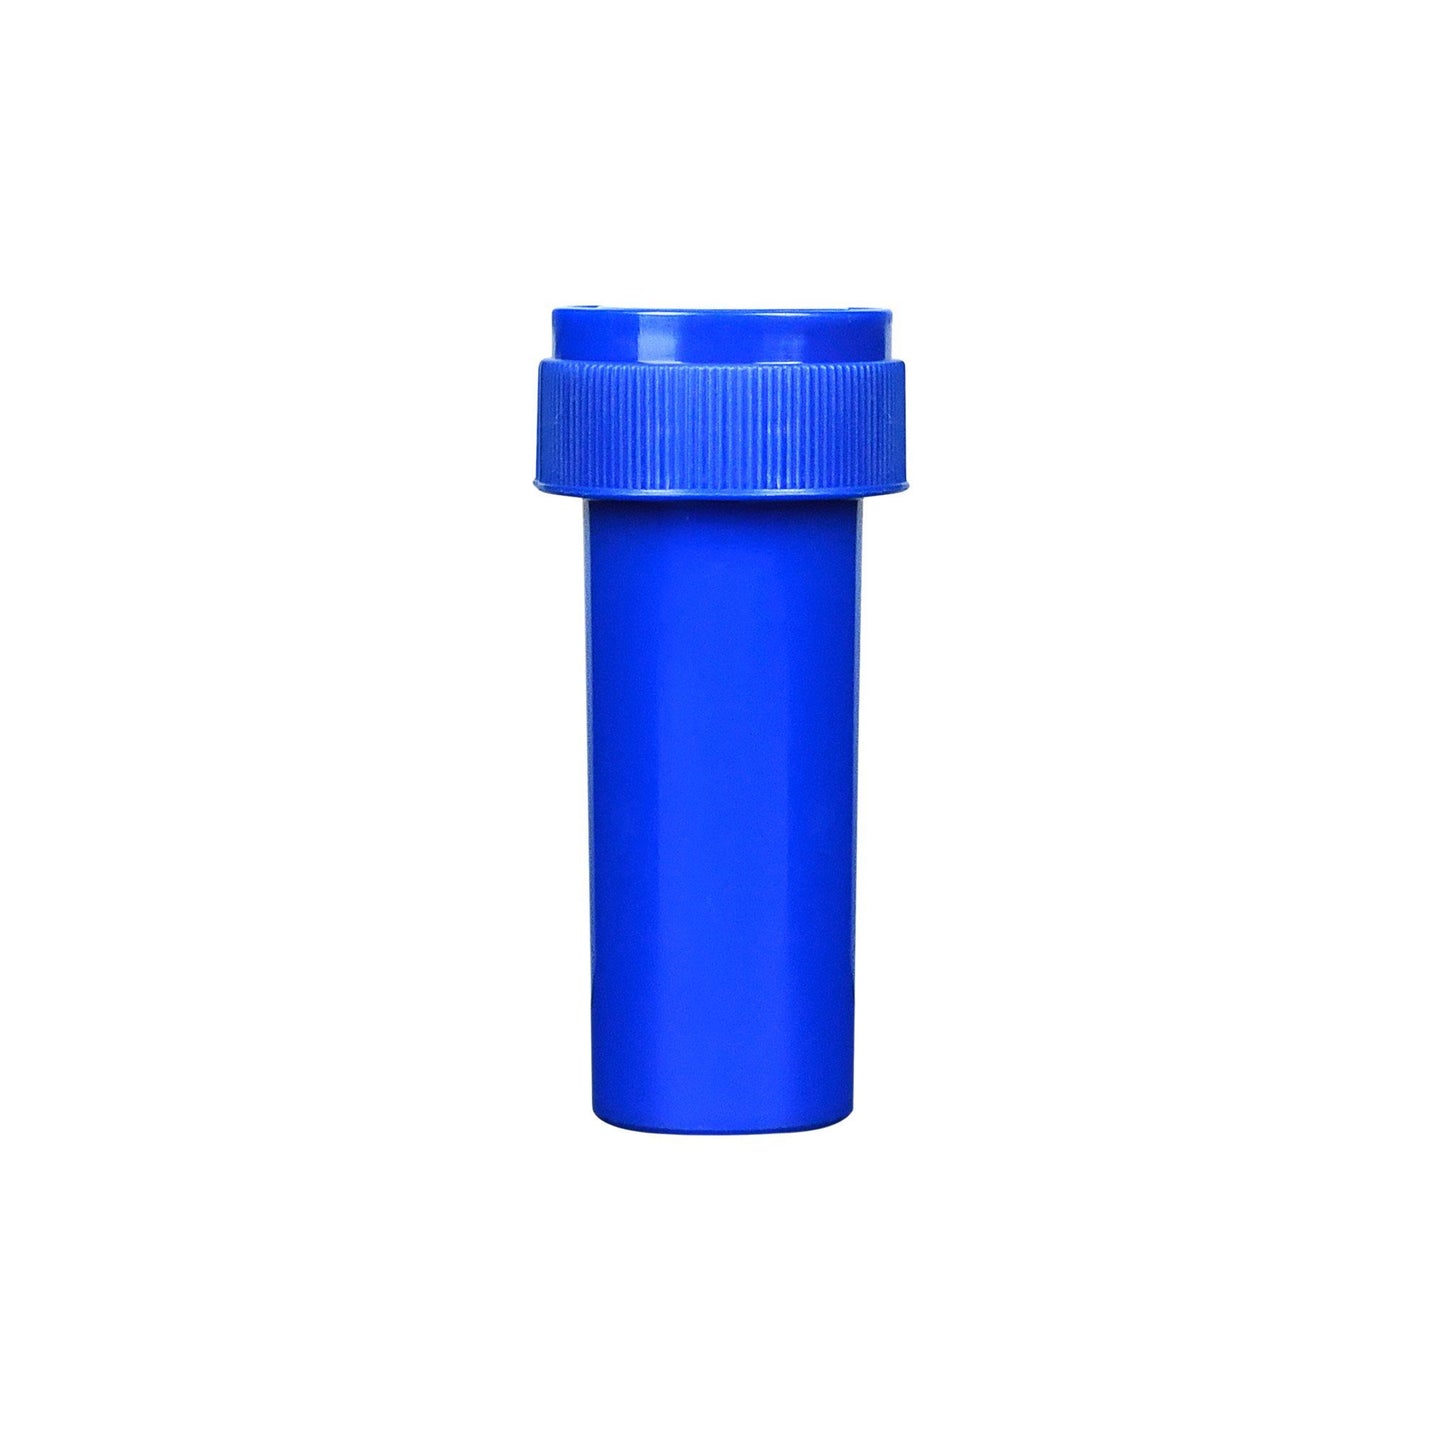 Opaque Blue Reversible Cap Vials for Medical Pharmacies & Dispensaries